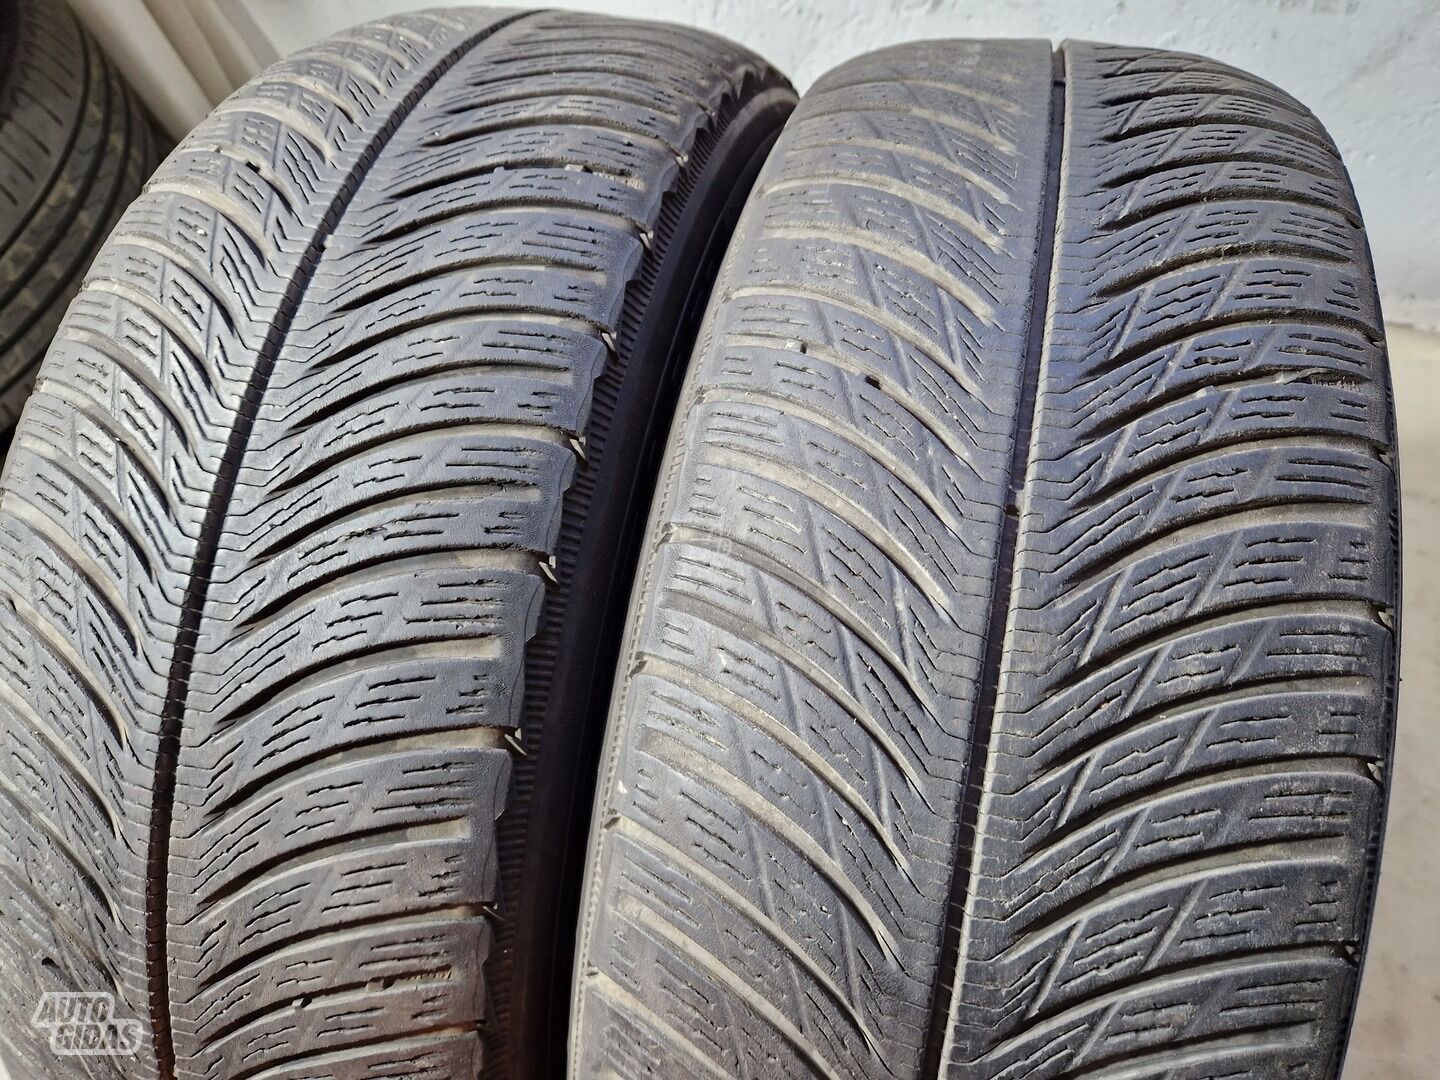 Michelin 4-5mm, 2019m R17 winter tyres passanger car